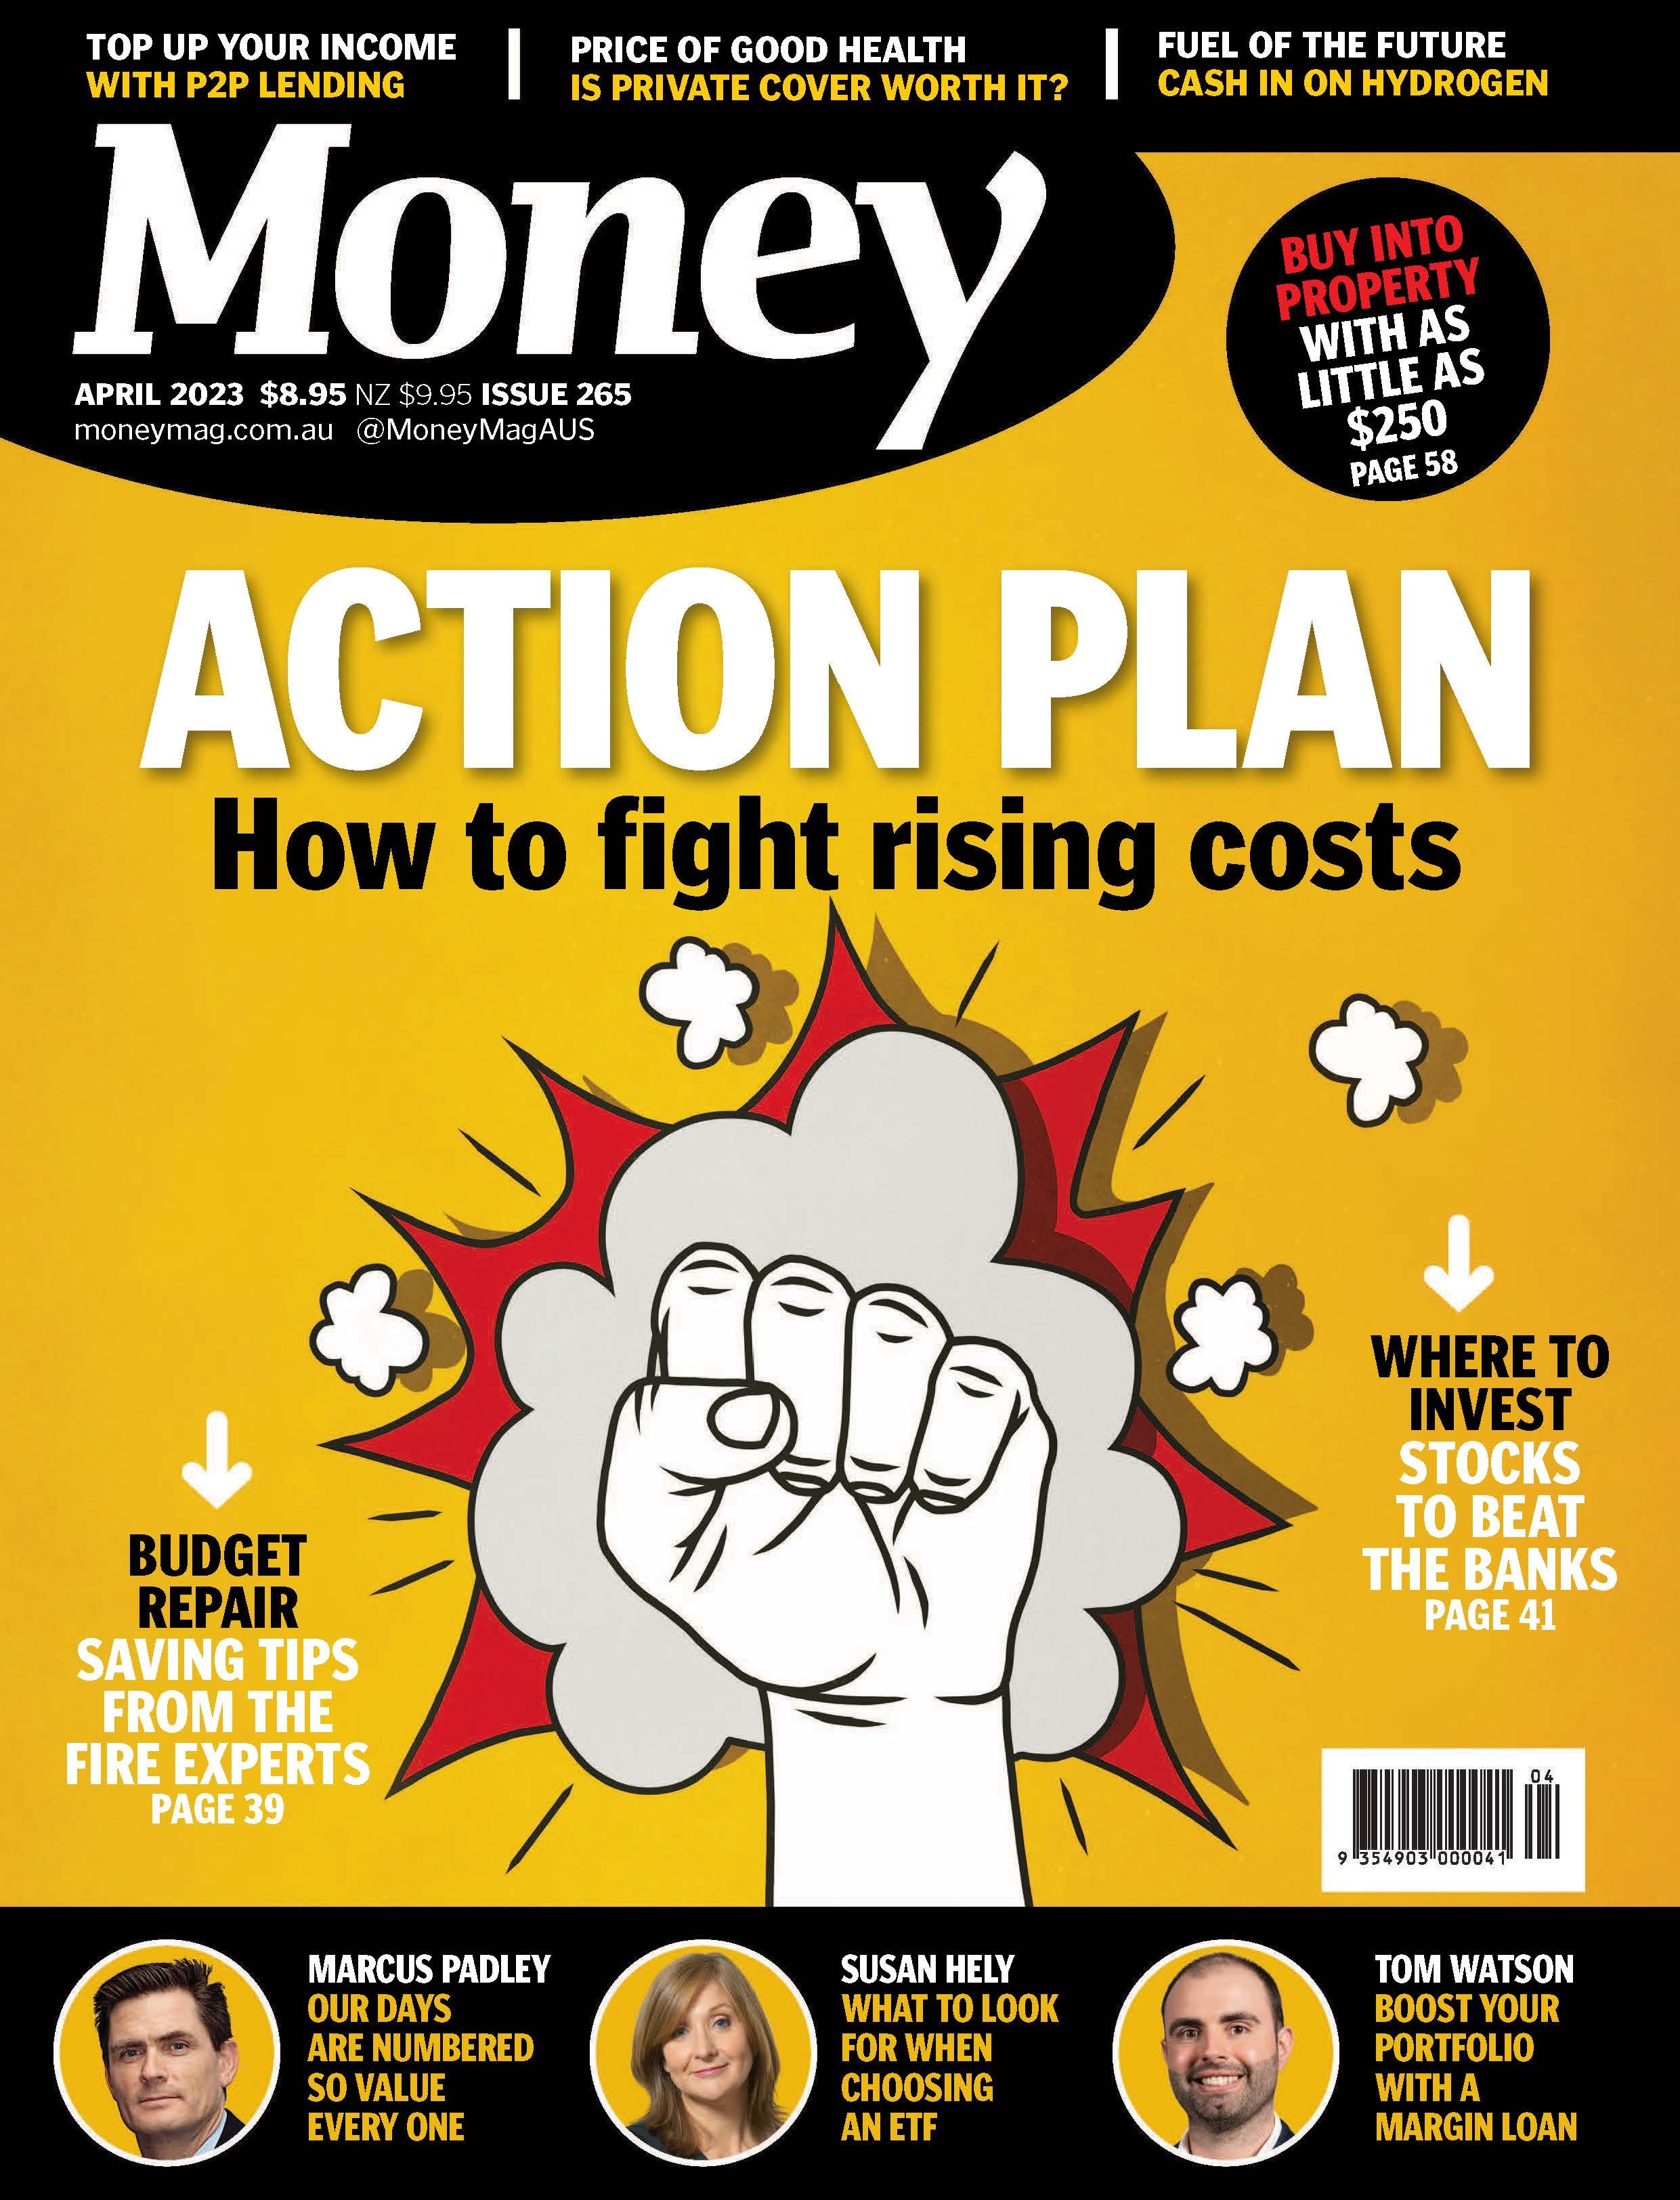 Banyantree-Money Magazine (April 2023)_Page_1.jpg